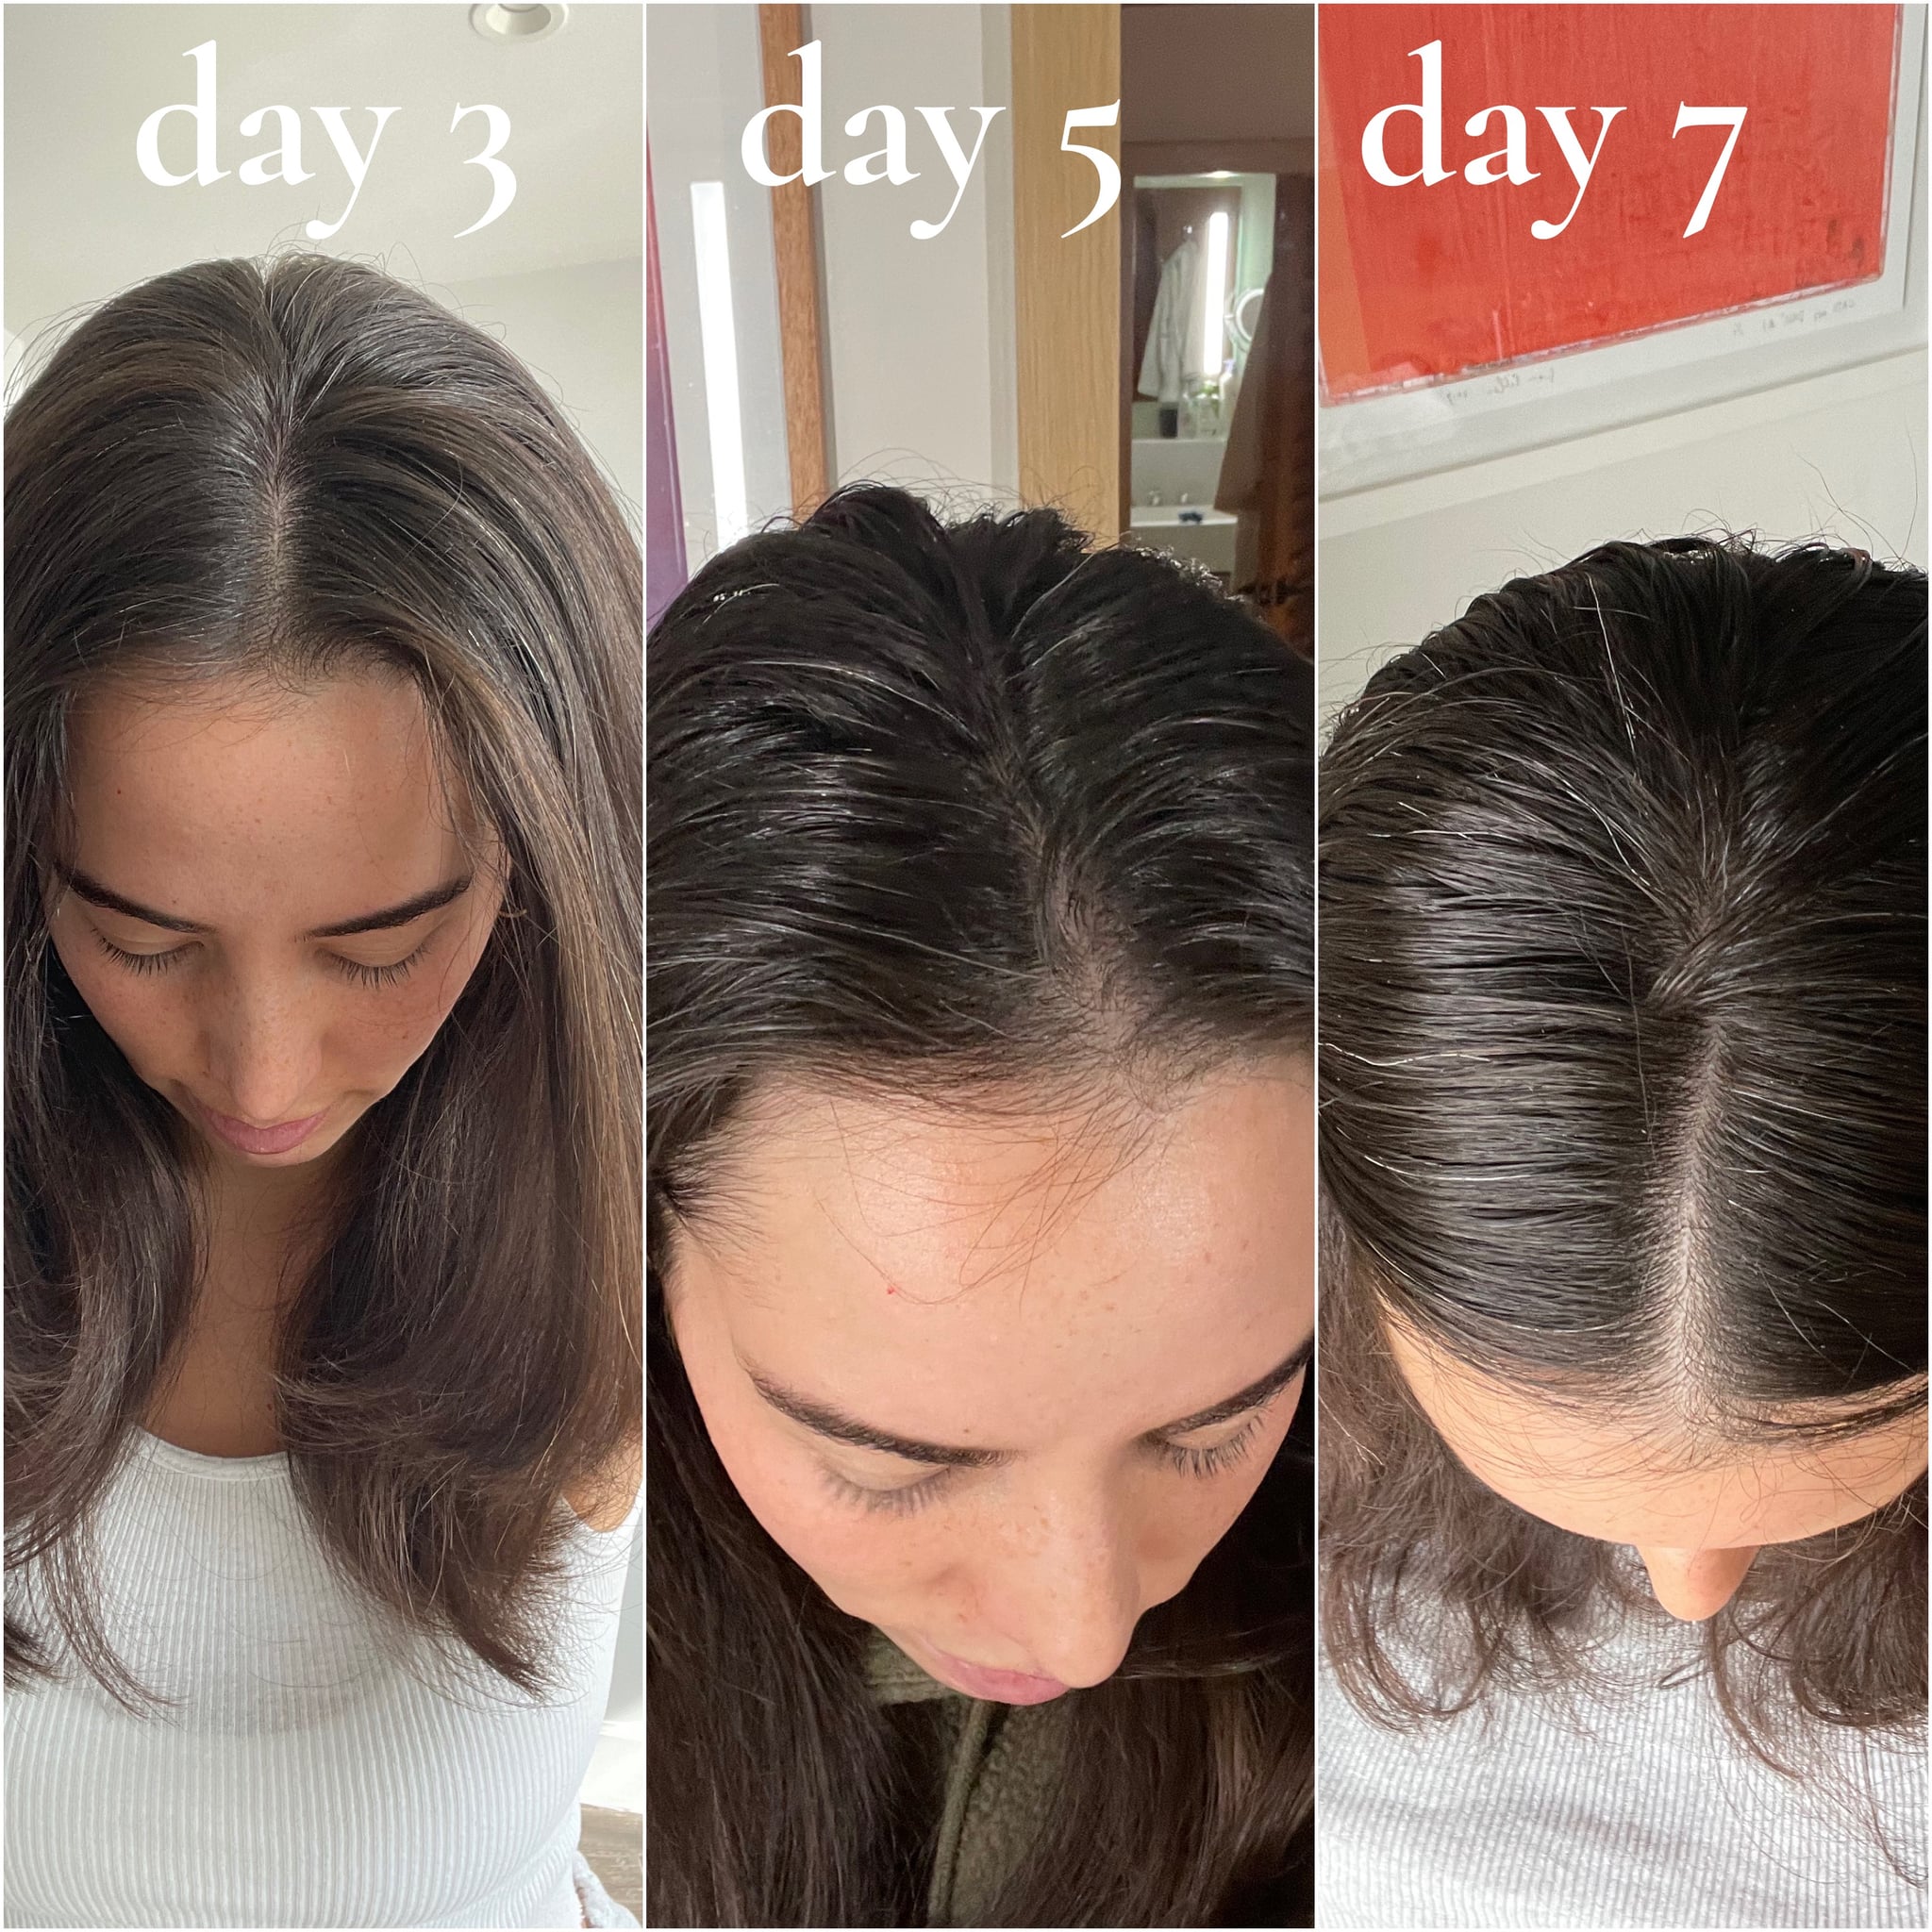 I Didn't Wash My Hair For 7 Days: Hair Detox Experiment | POPSUGAR Beauty